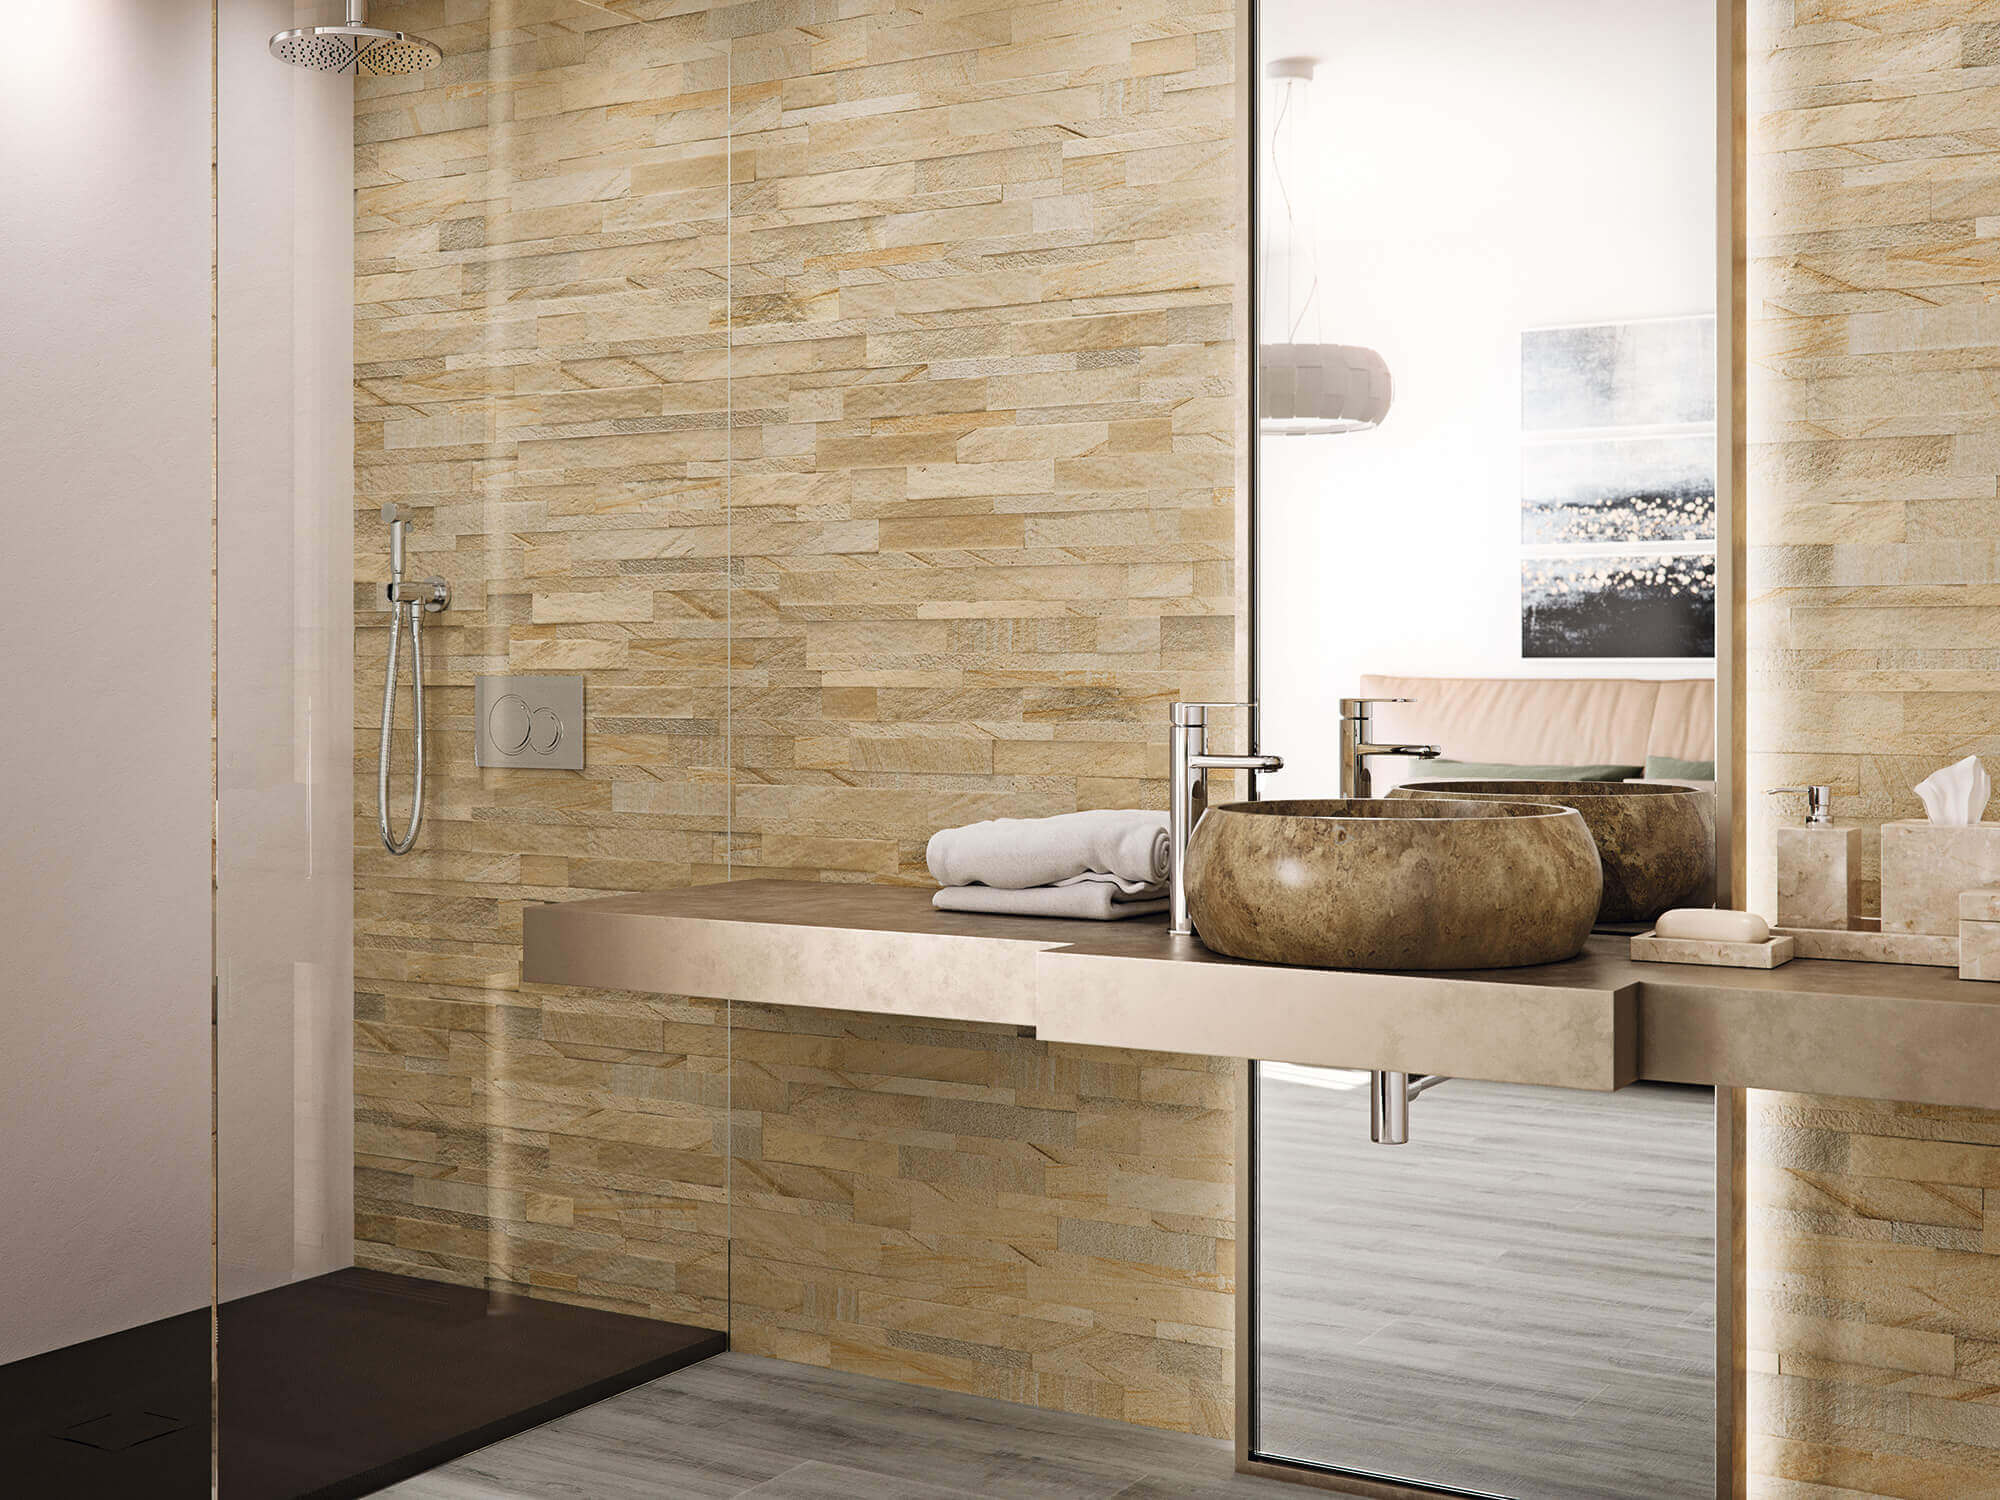 amb ANJASORA ST 6041pav KTM 010 cmyk - Bathrooms with natural stone